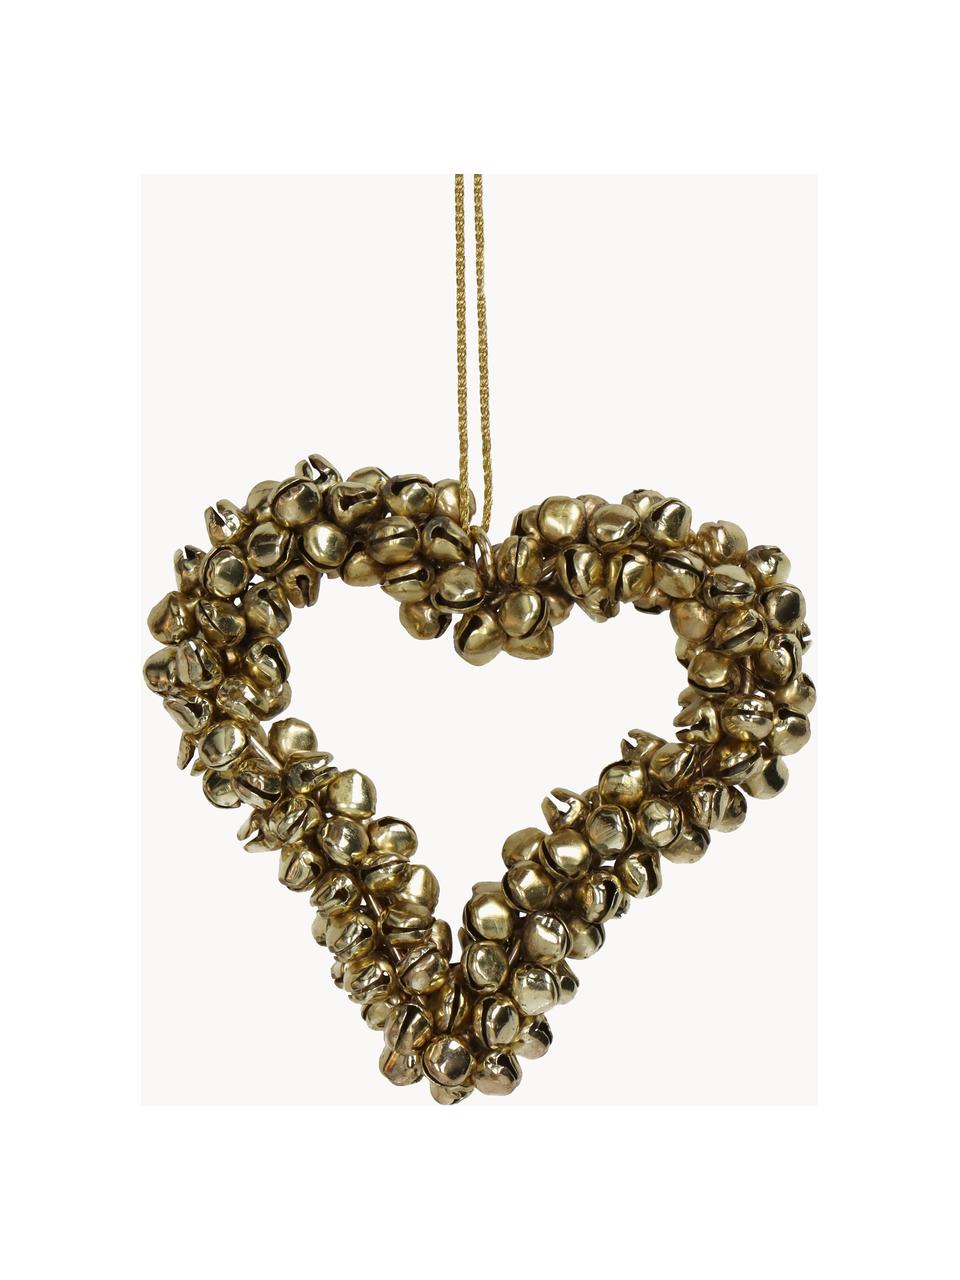 Baumanhänger Heart mit Glöckchen, Metall, beschichtet, Goldfarben, B 9 x H 9 cm